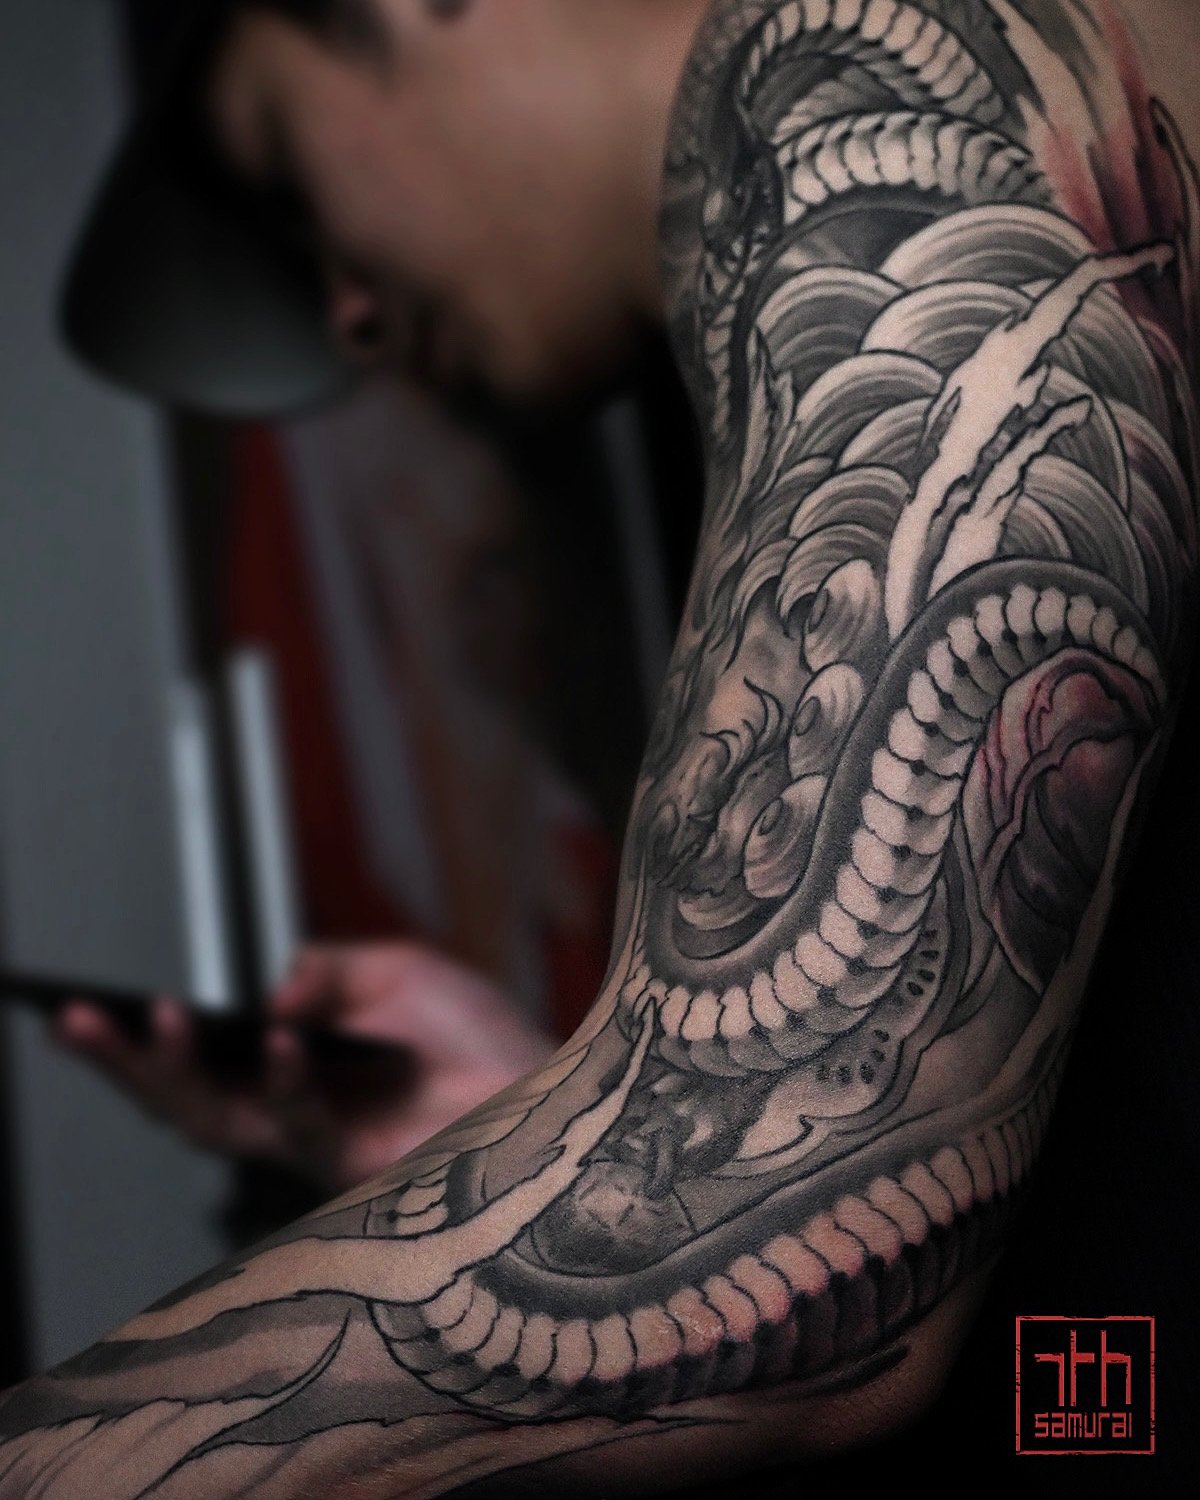 Asian zodiacs: year of Snake fudog   Men's neo japanese asian astrology arm sleeve tattoo  asian artist: Kai 7th Samurai. YEG Edmonton, Alberta, Canada 2023 best 2024 